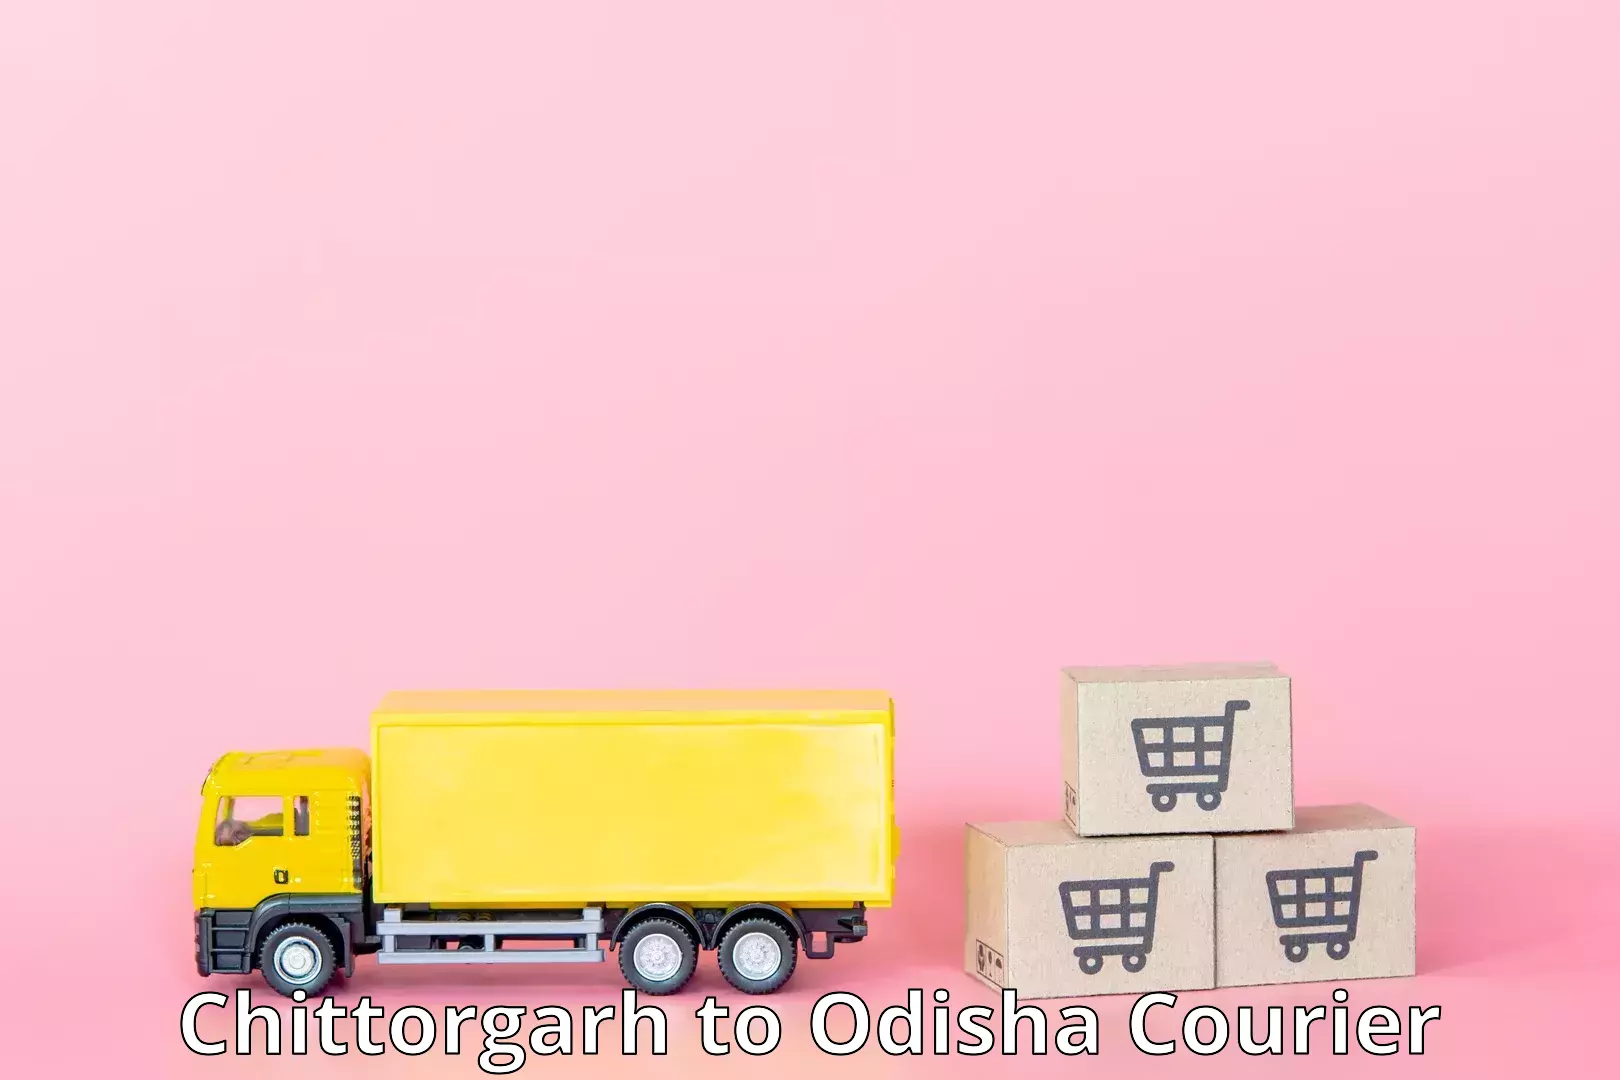 Logistics service provider Chittorgarh to Odisha